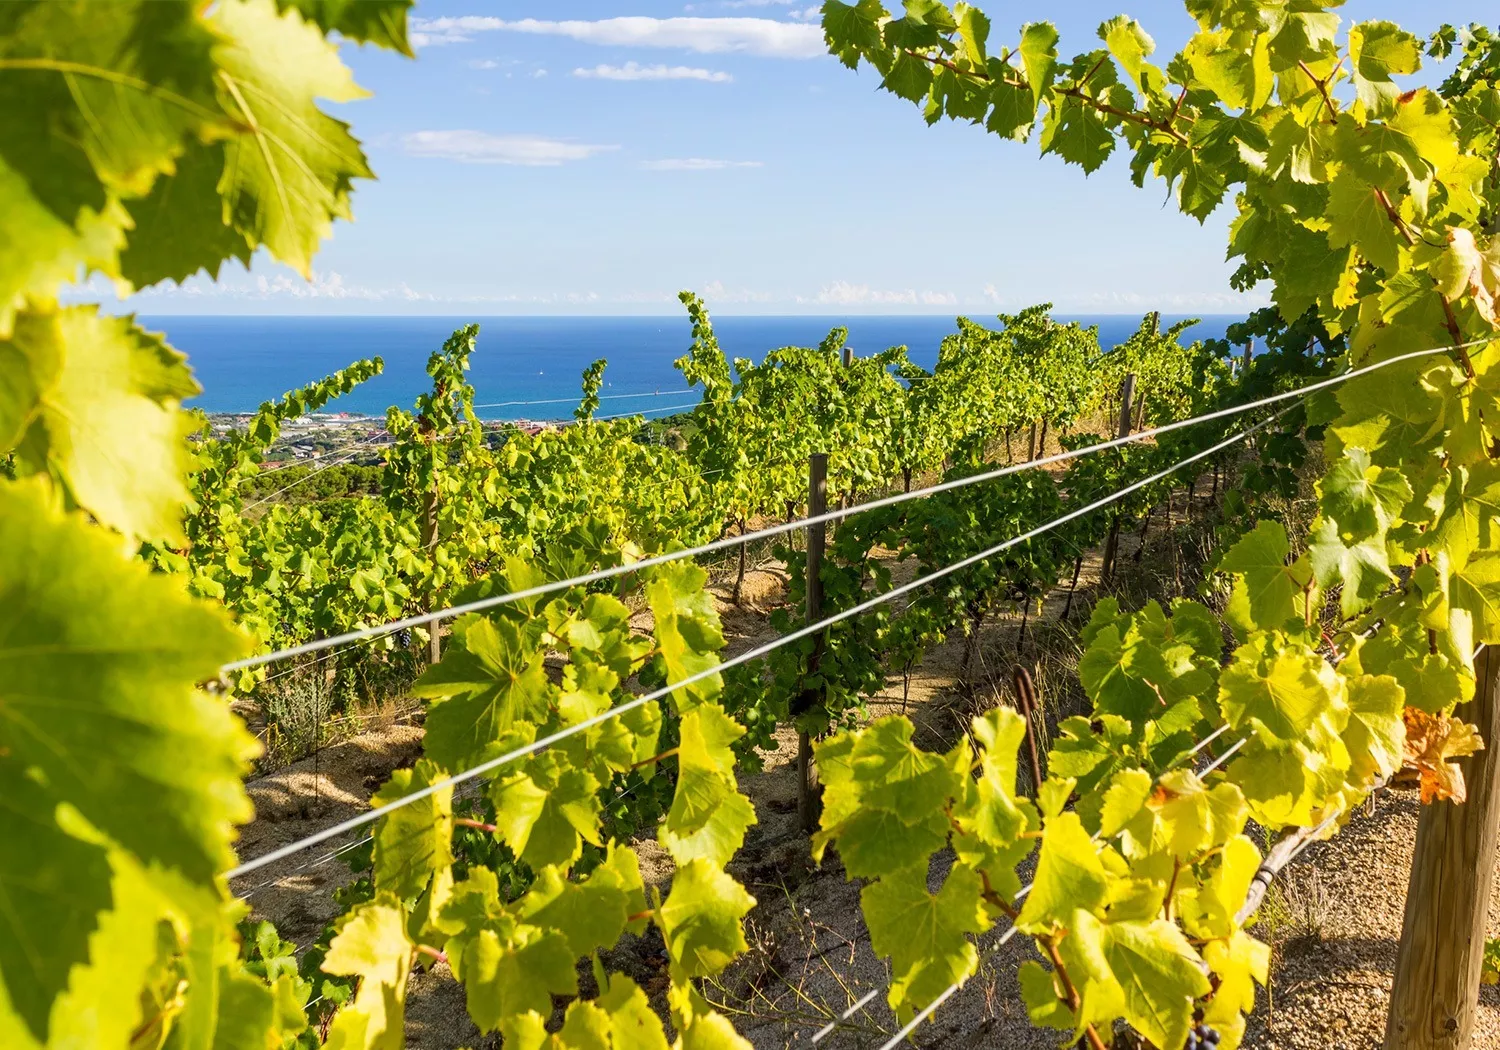 Vineyards in Catalonia